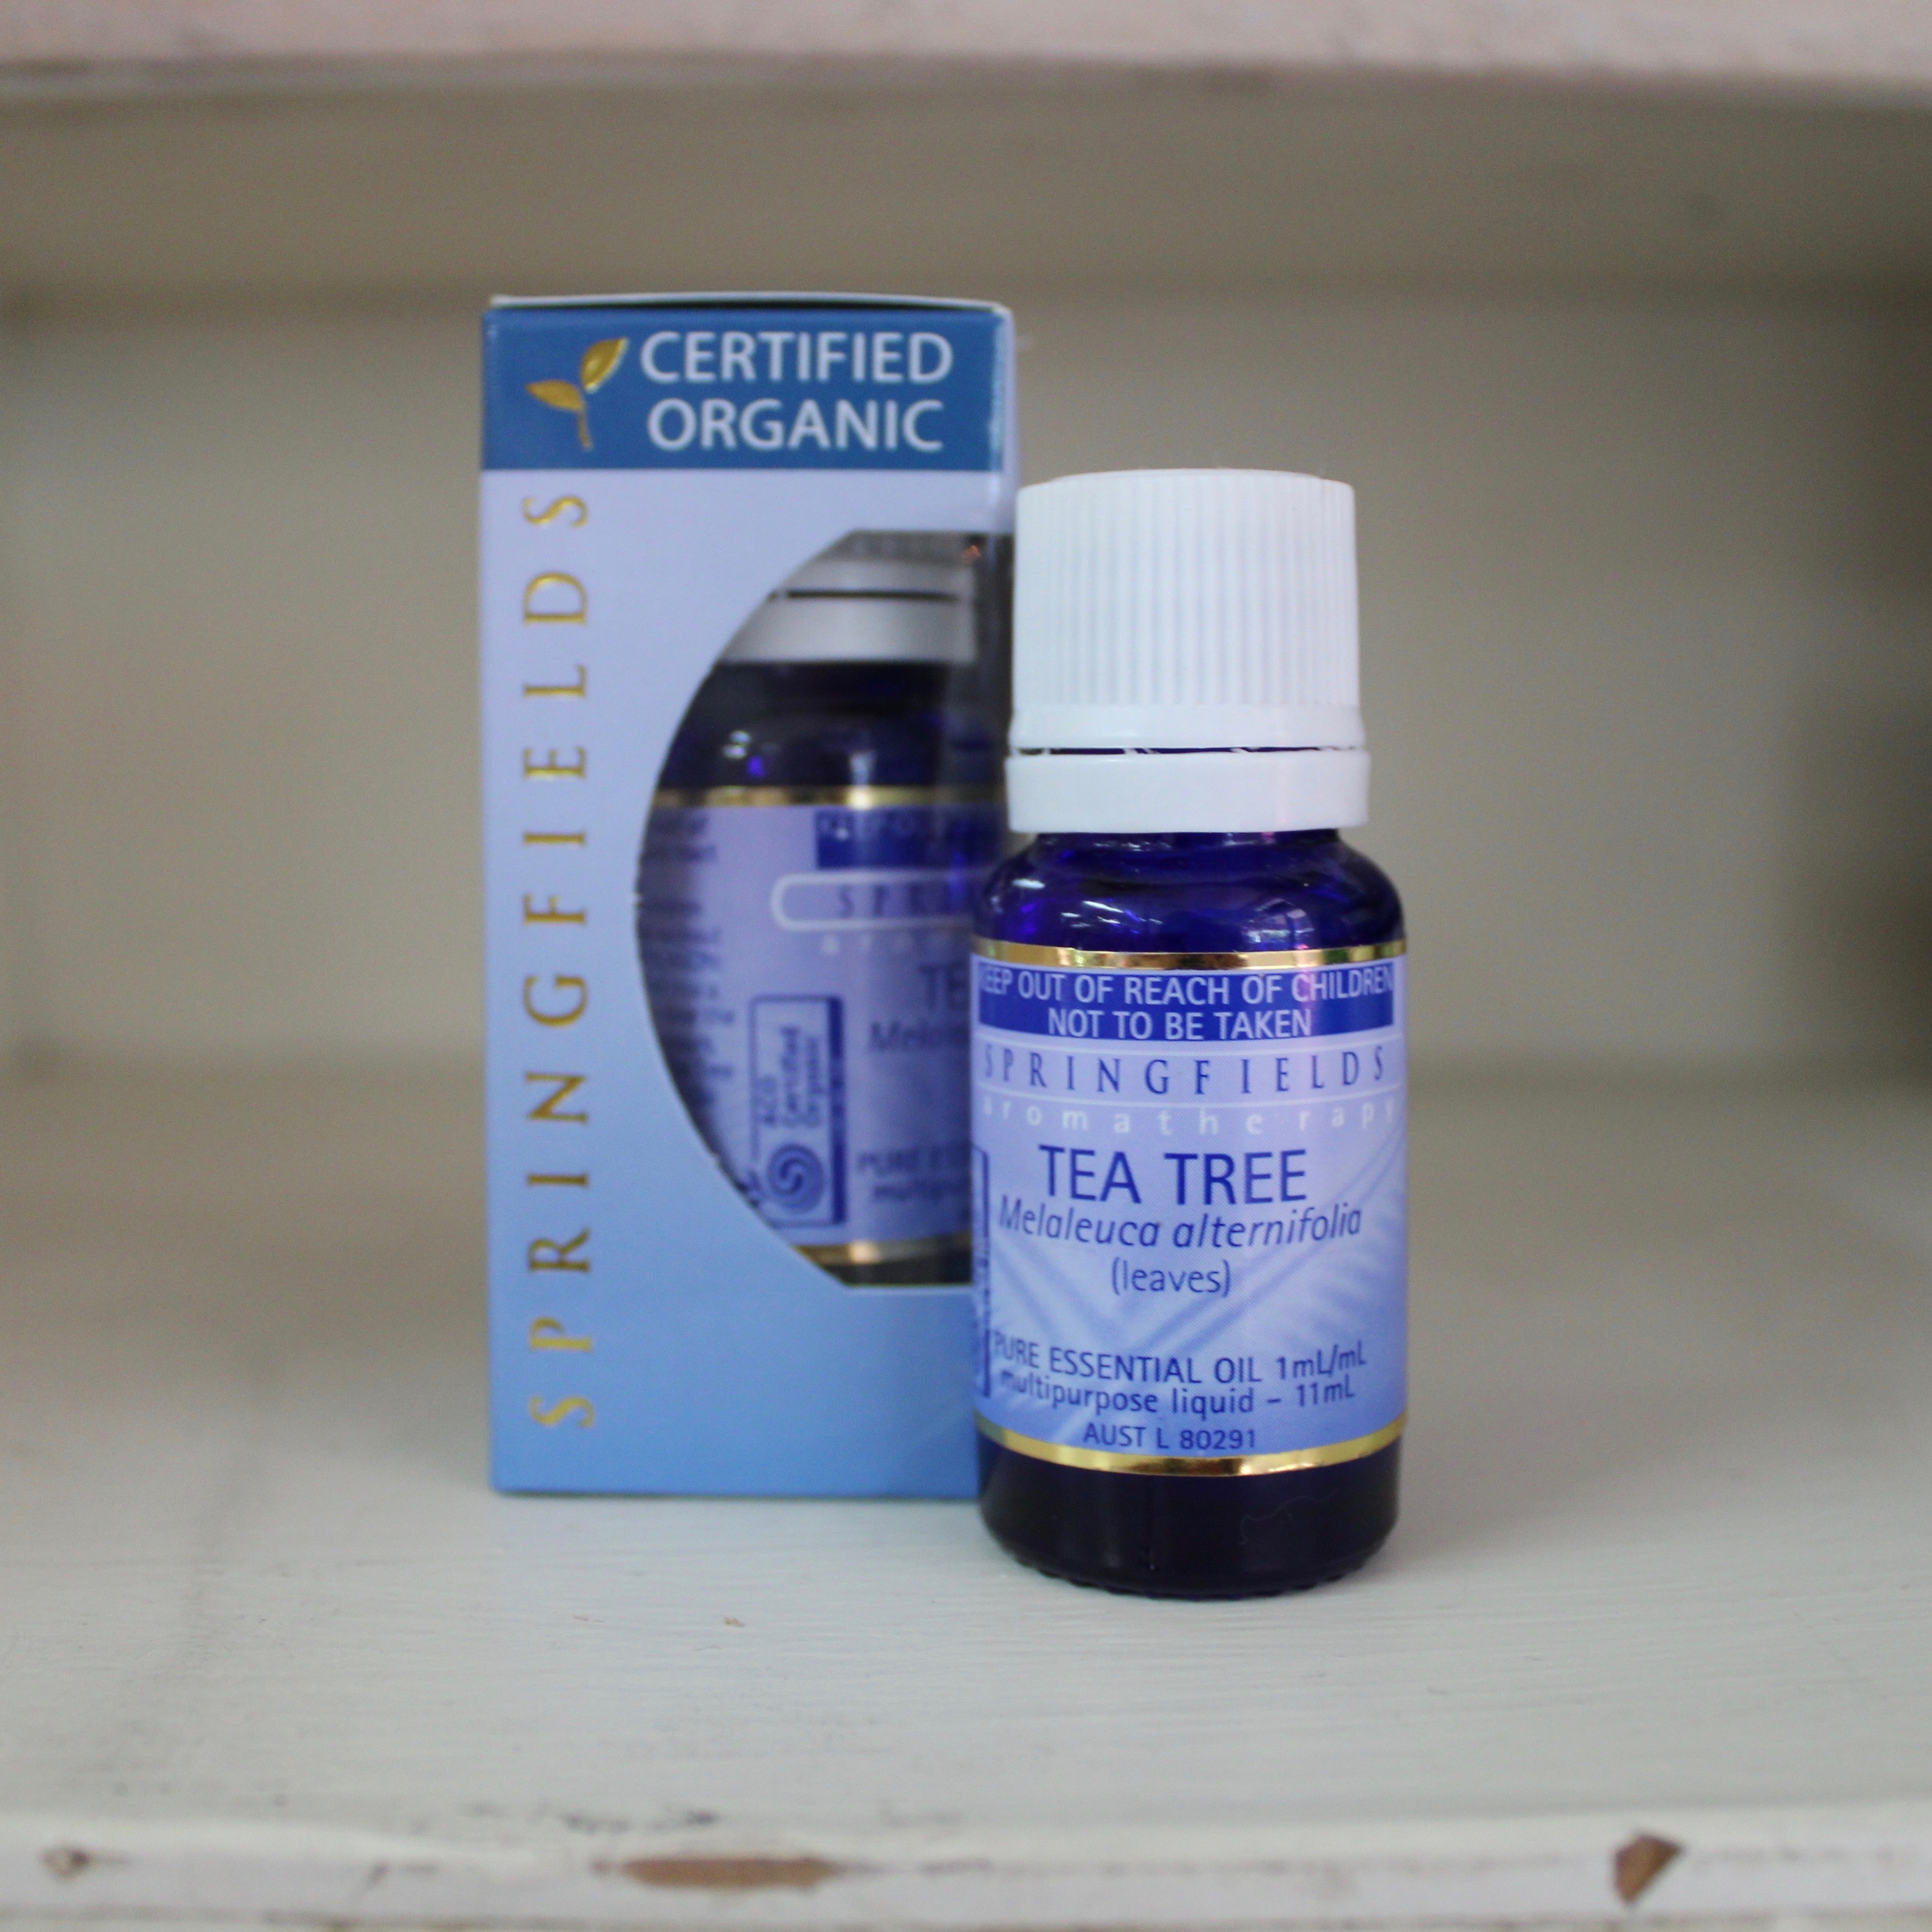 Springfields Certified Organic Tea Tree 11ml Pure Essential Oil